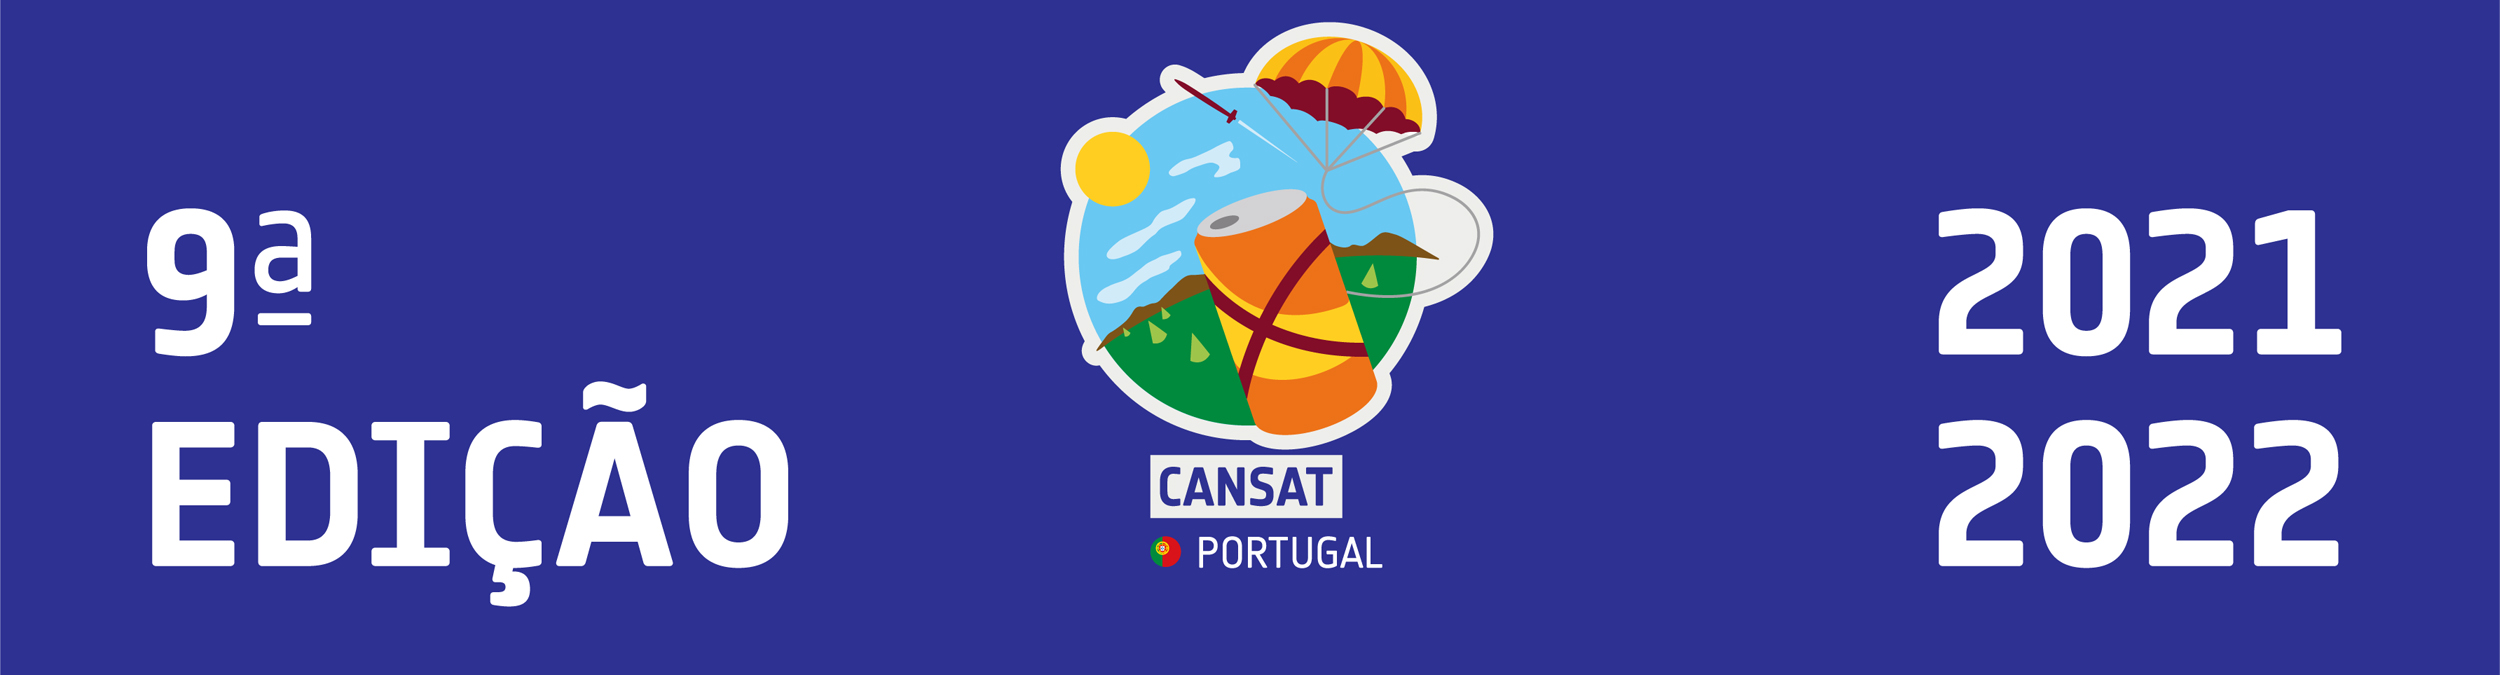 Projeto CanSat Portugal